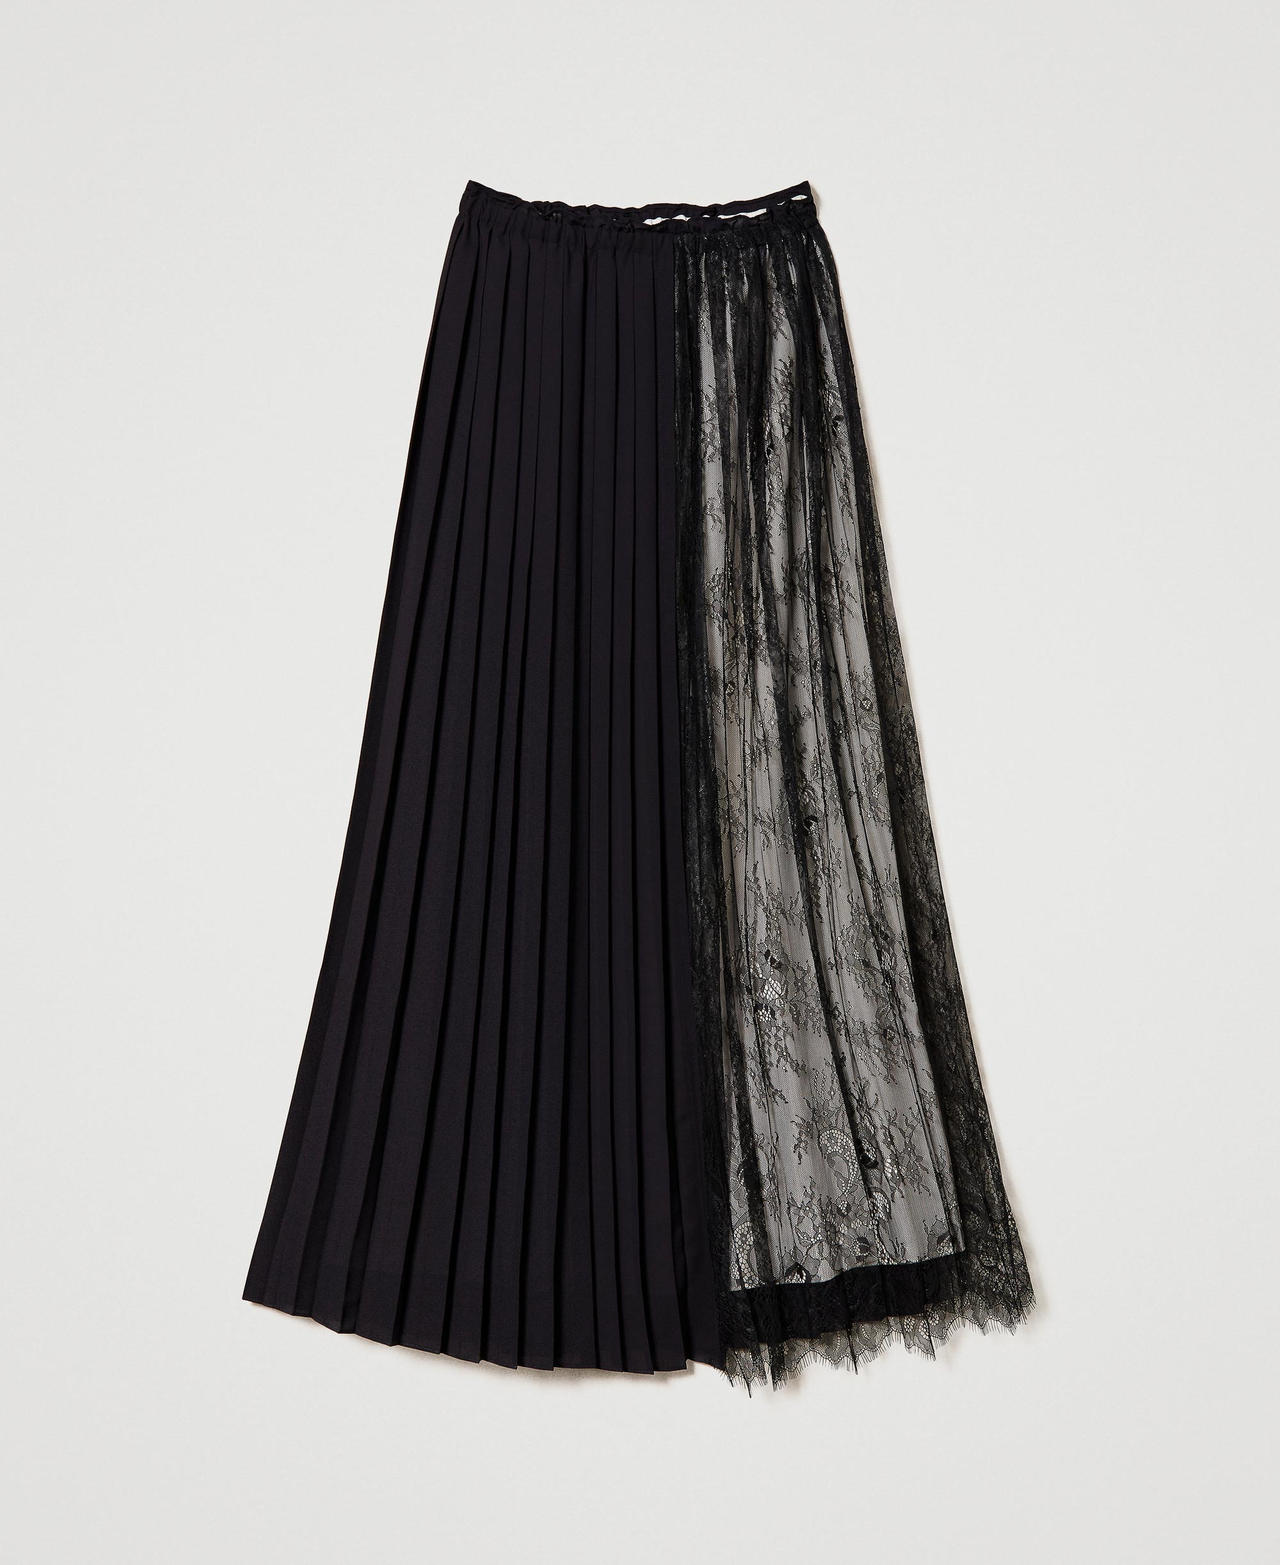 Falda larga plisada con encaje Bicolor Negro / Vainilla Mujer 232LI2RBB-0S